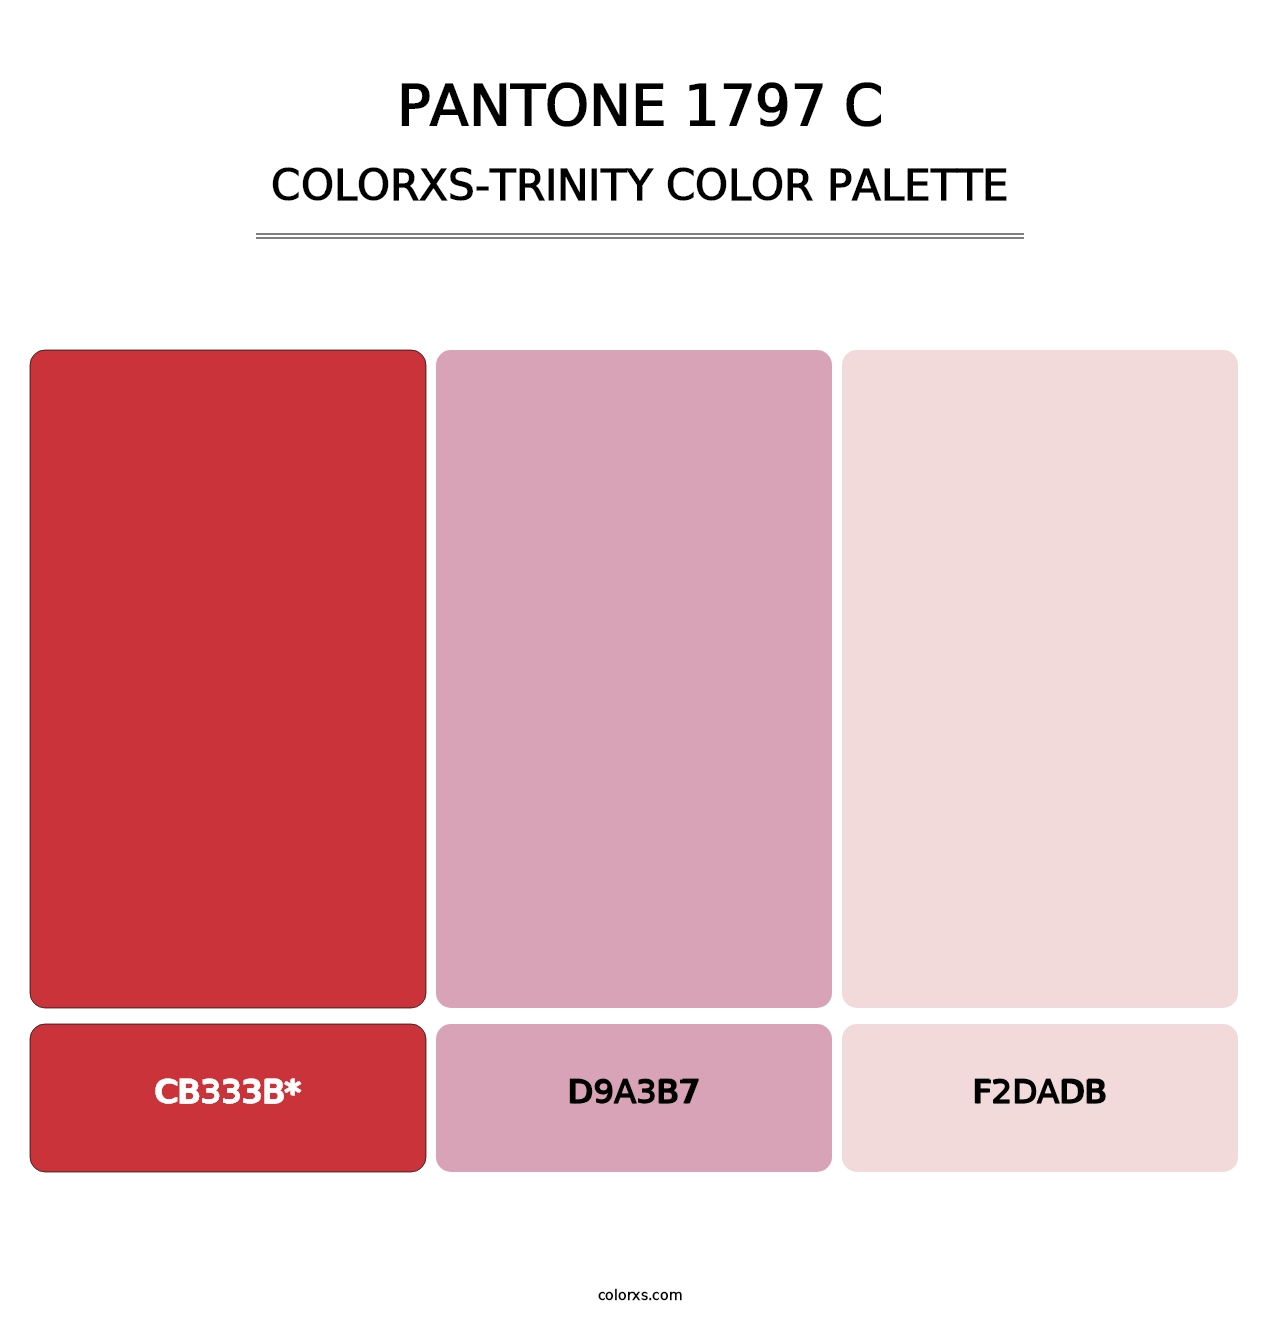 PANTONE 1797 C - Colorxs Trinity Palette